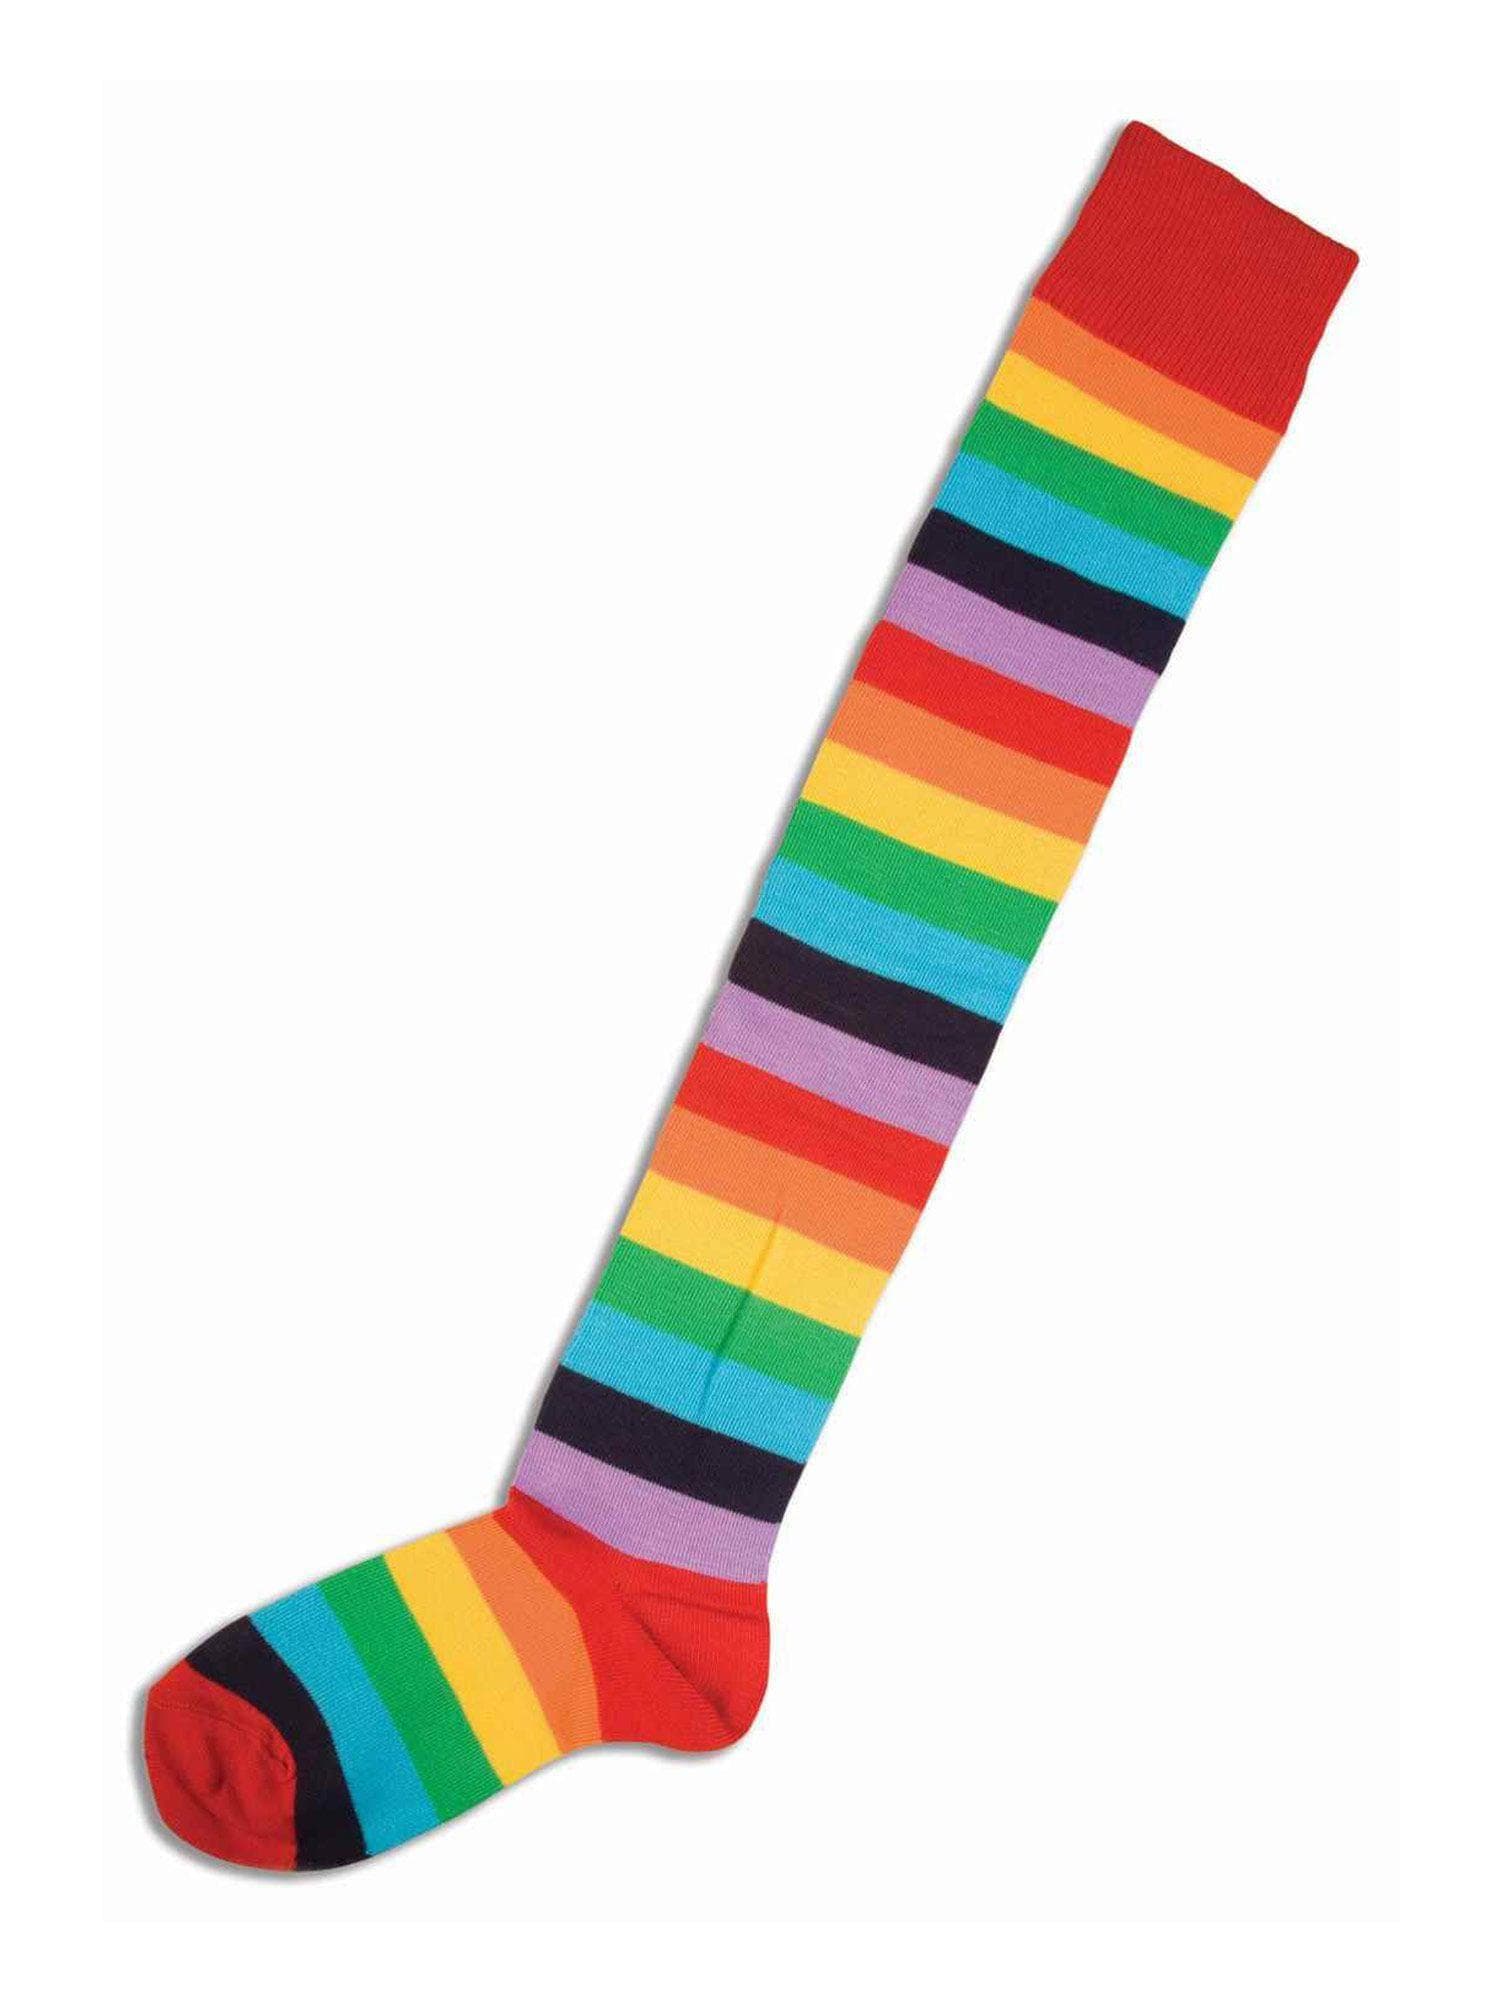 Adult Multi Color Long Clown Socks - costumes.com